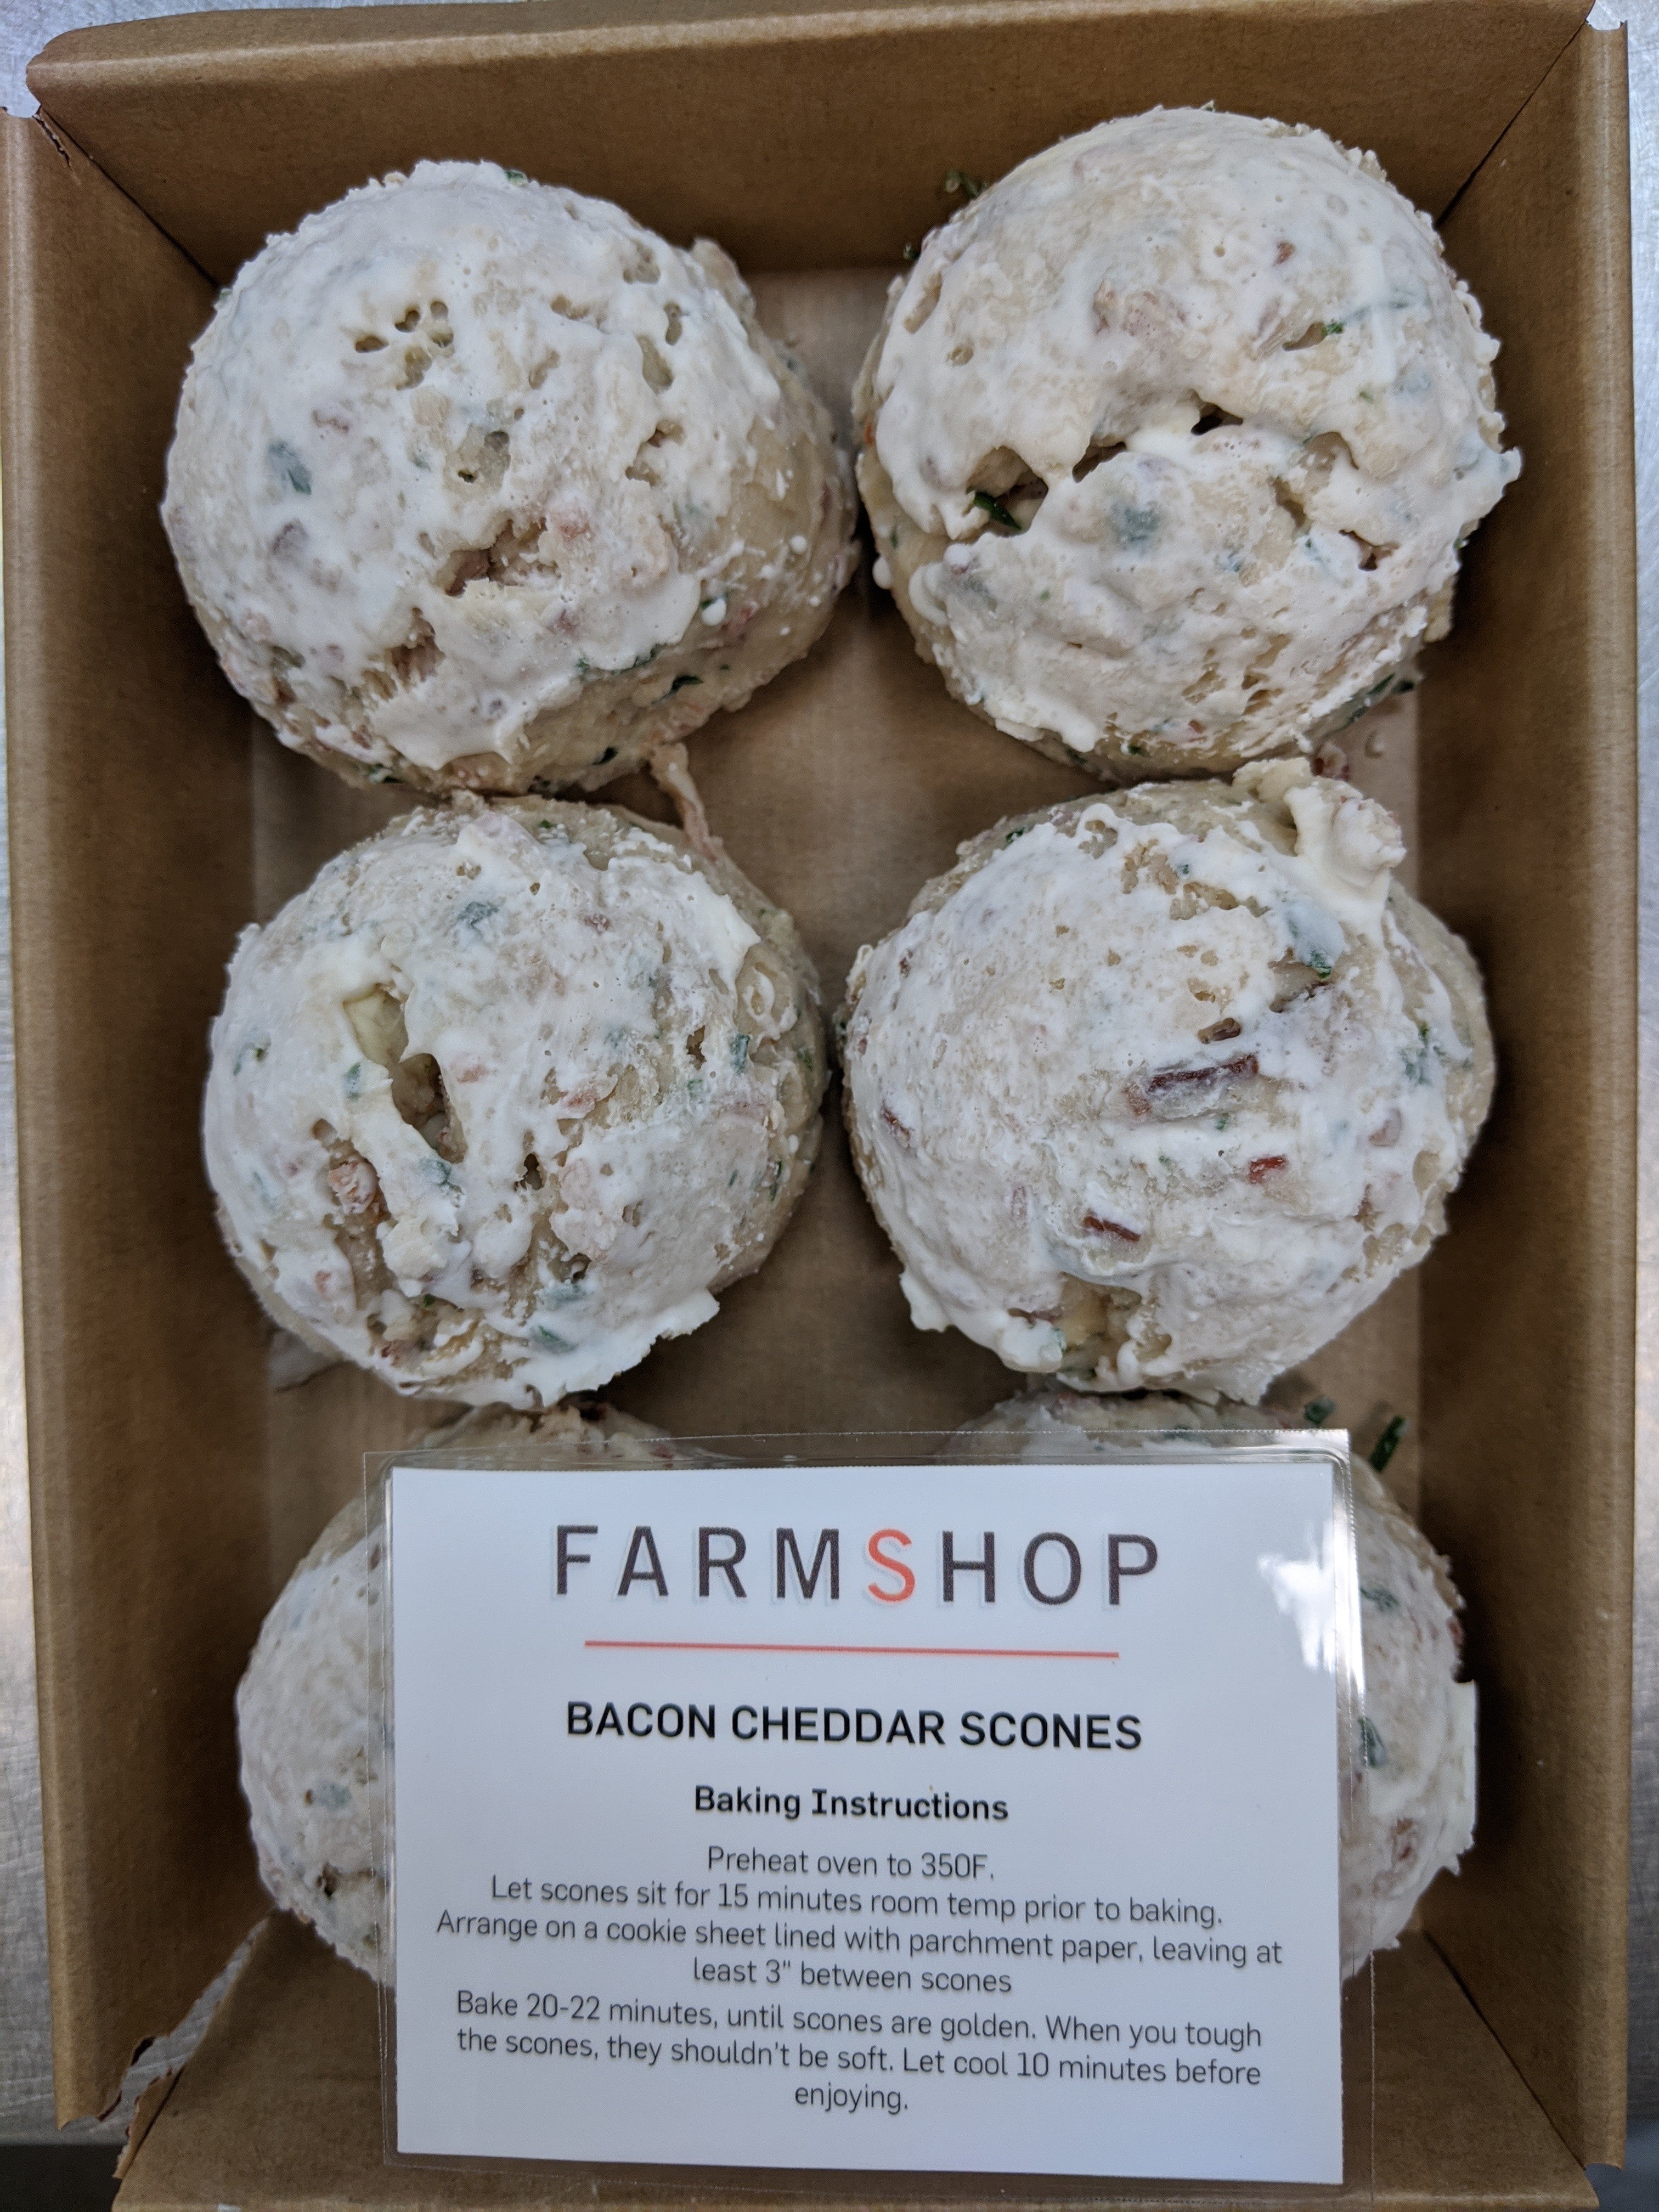 Farmshop Bakery, Frozen Bacon Cheddar Scones, 6 pk